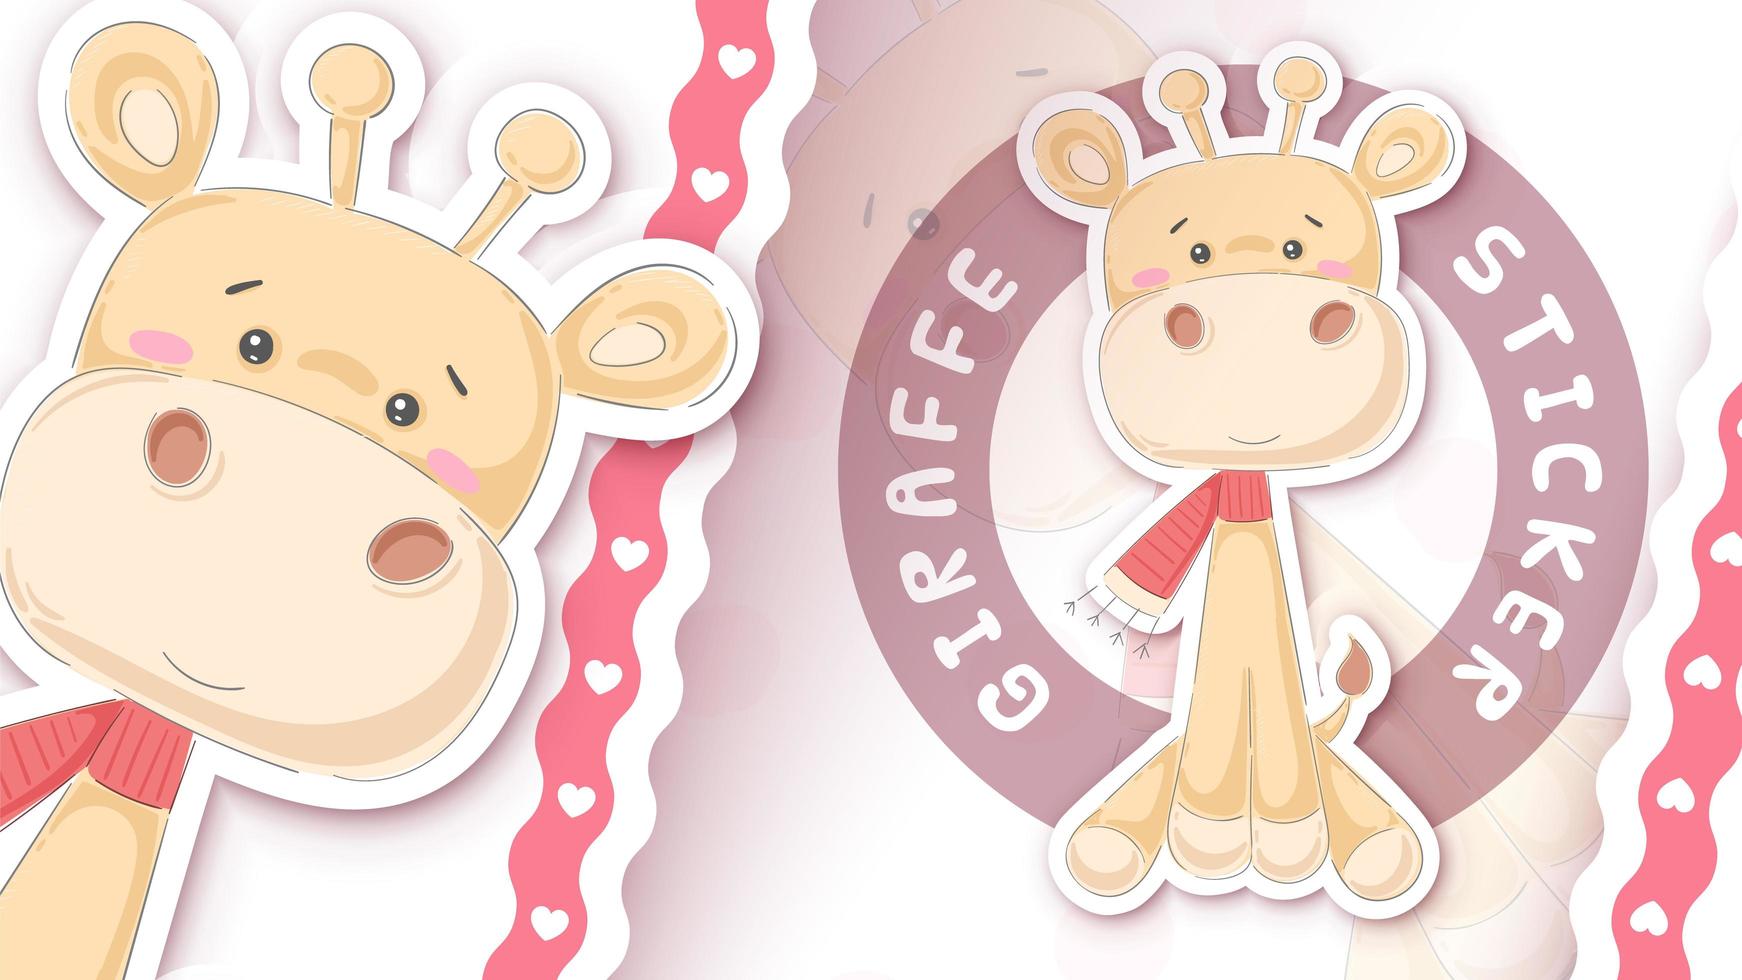 Cute giraffe character in sticker style vector